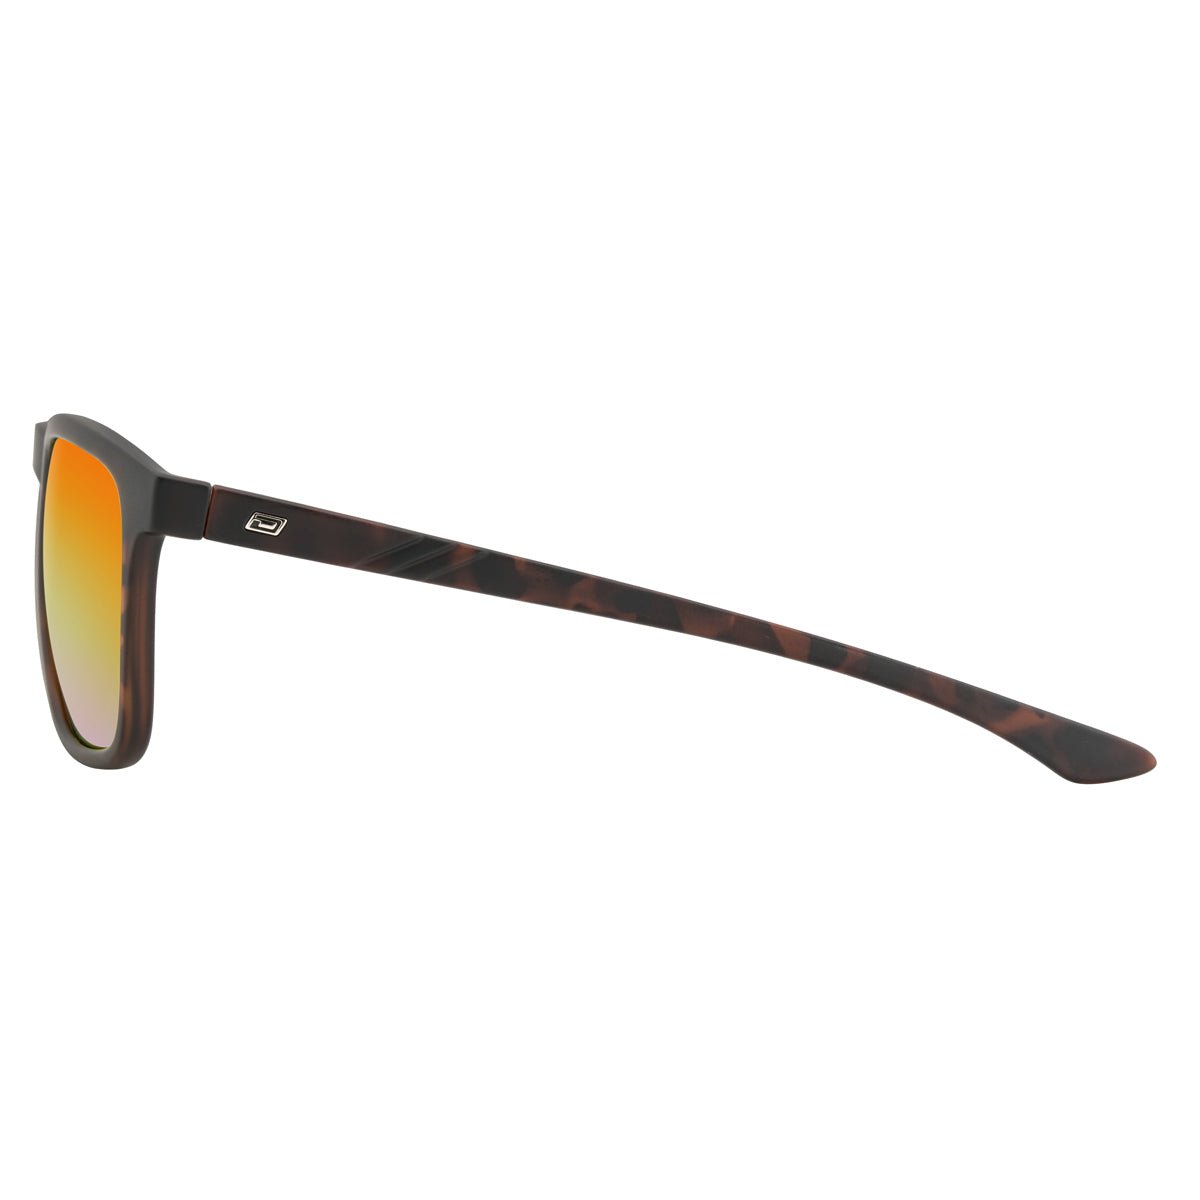 Dirty Dog Shadow Sunglasses - Worthing Watersports - 53750 - Sunglasses - Dirty Dog